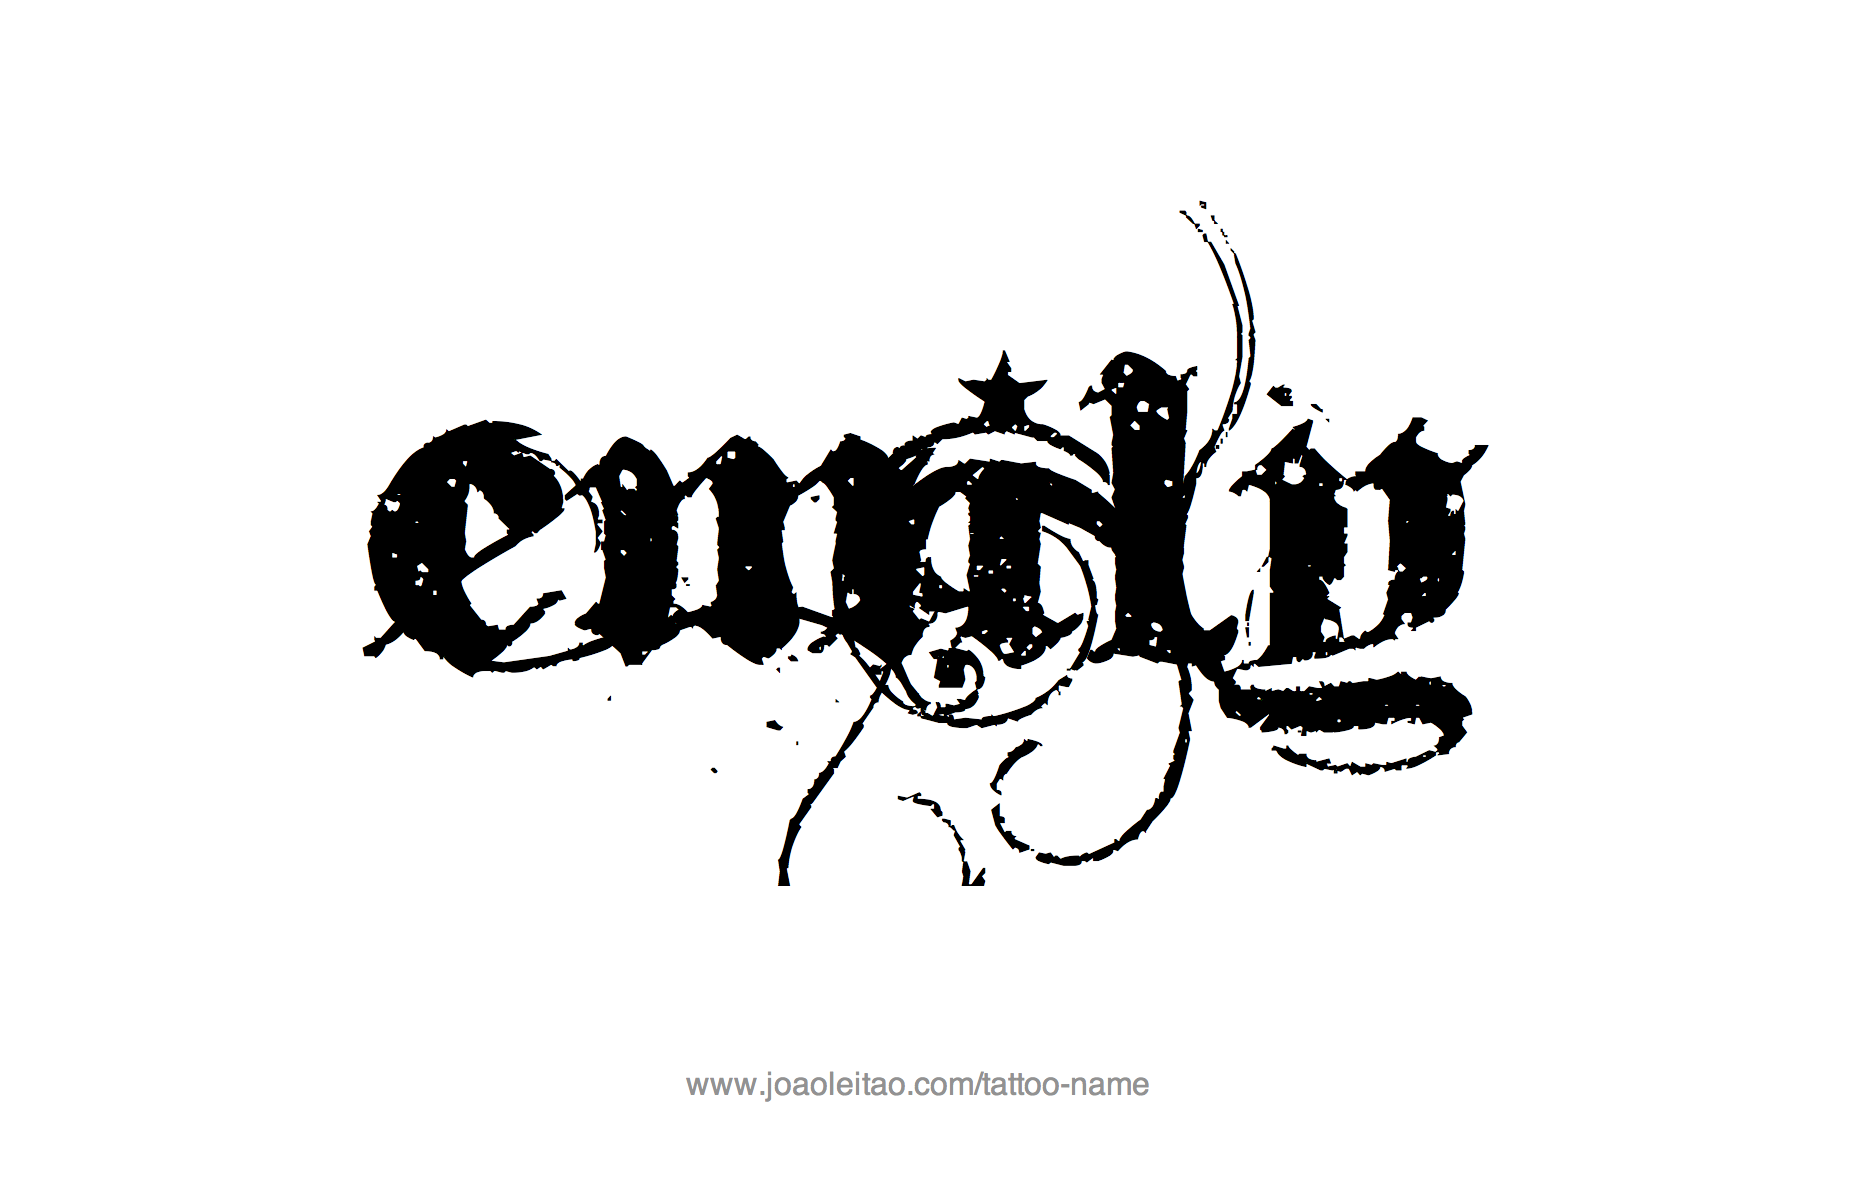 https://www.joaoleitao.com/tattoo-name/images/tattoo-design-female-name-emily%20(16).png